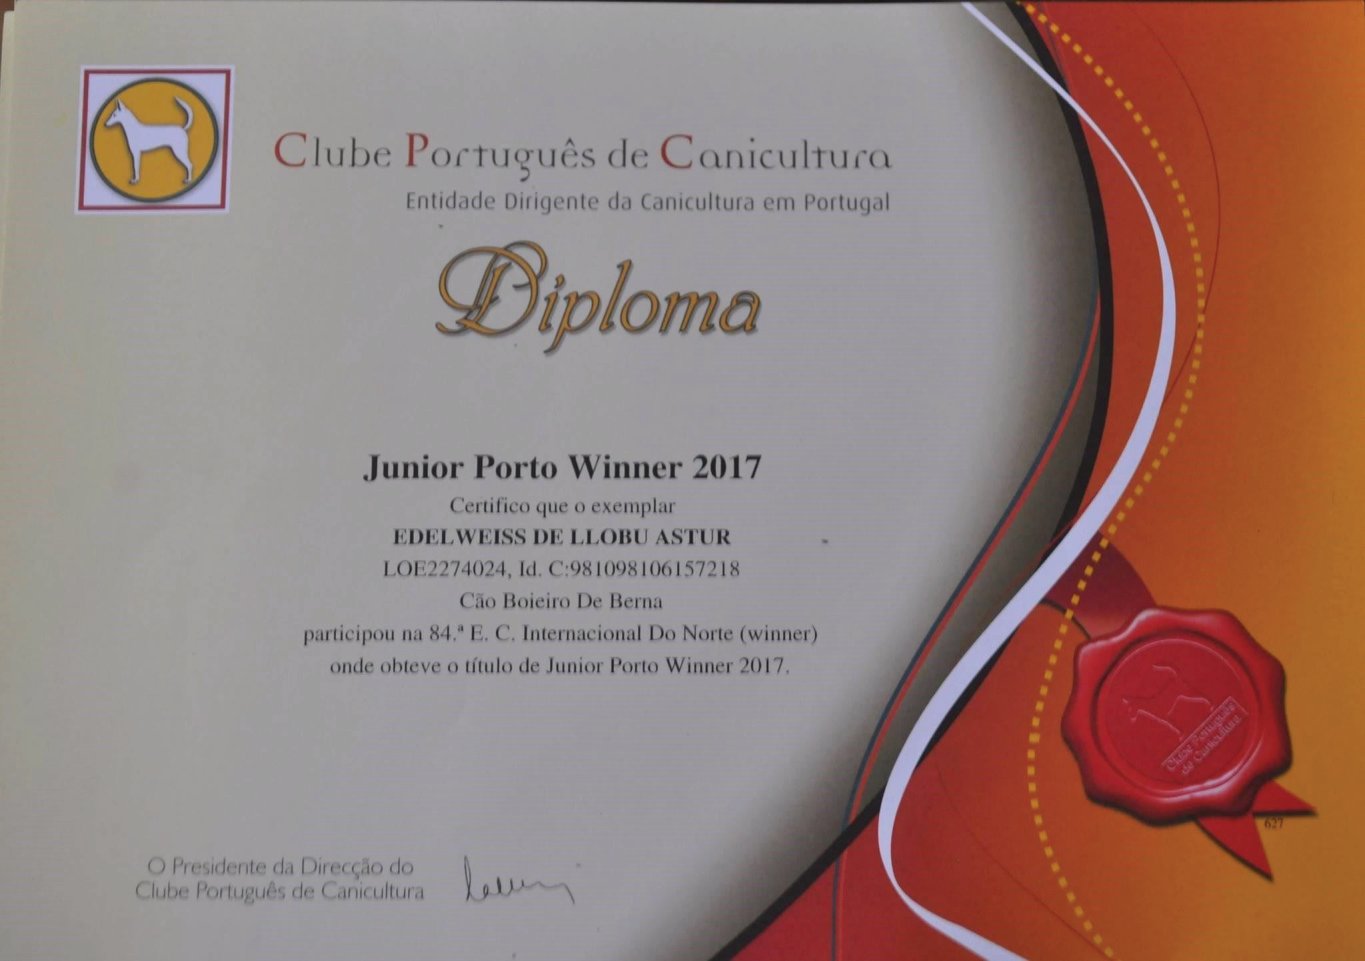 Edelweiss De Llobu Astur Junior Excelent 1 CCJ - Best Junior M . Junior Porto Winner 2017  Qualified for Crufts 2018